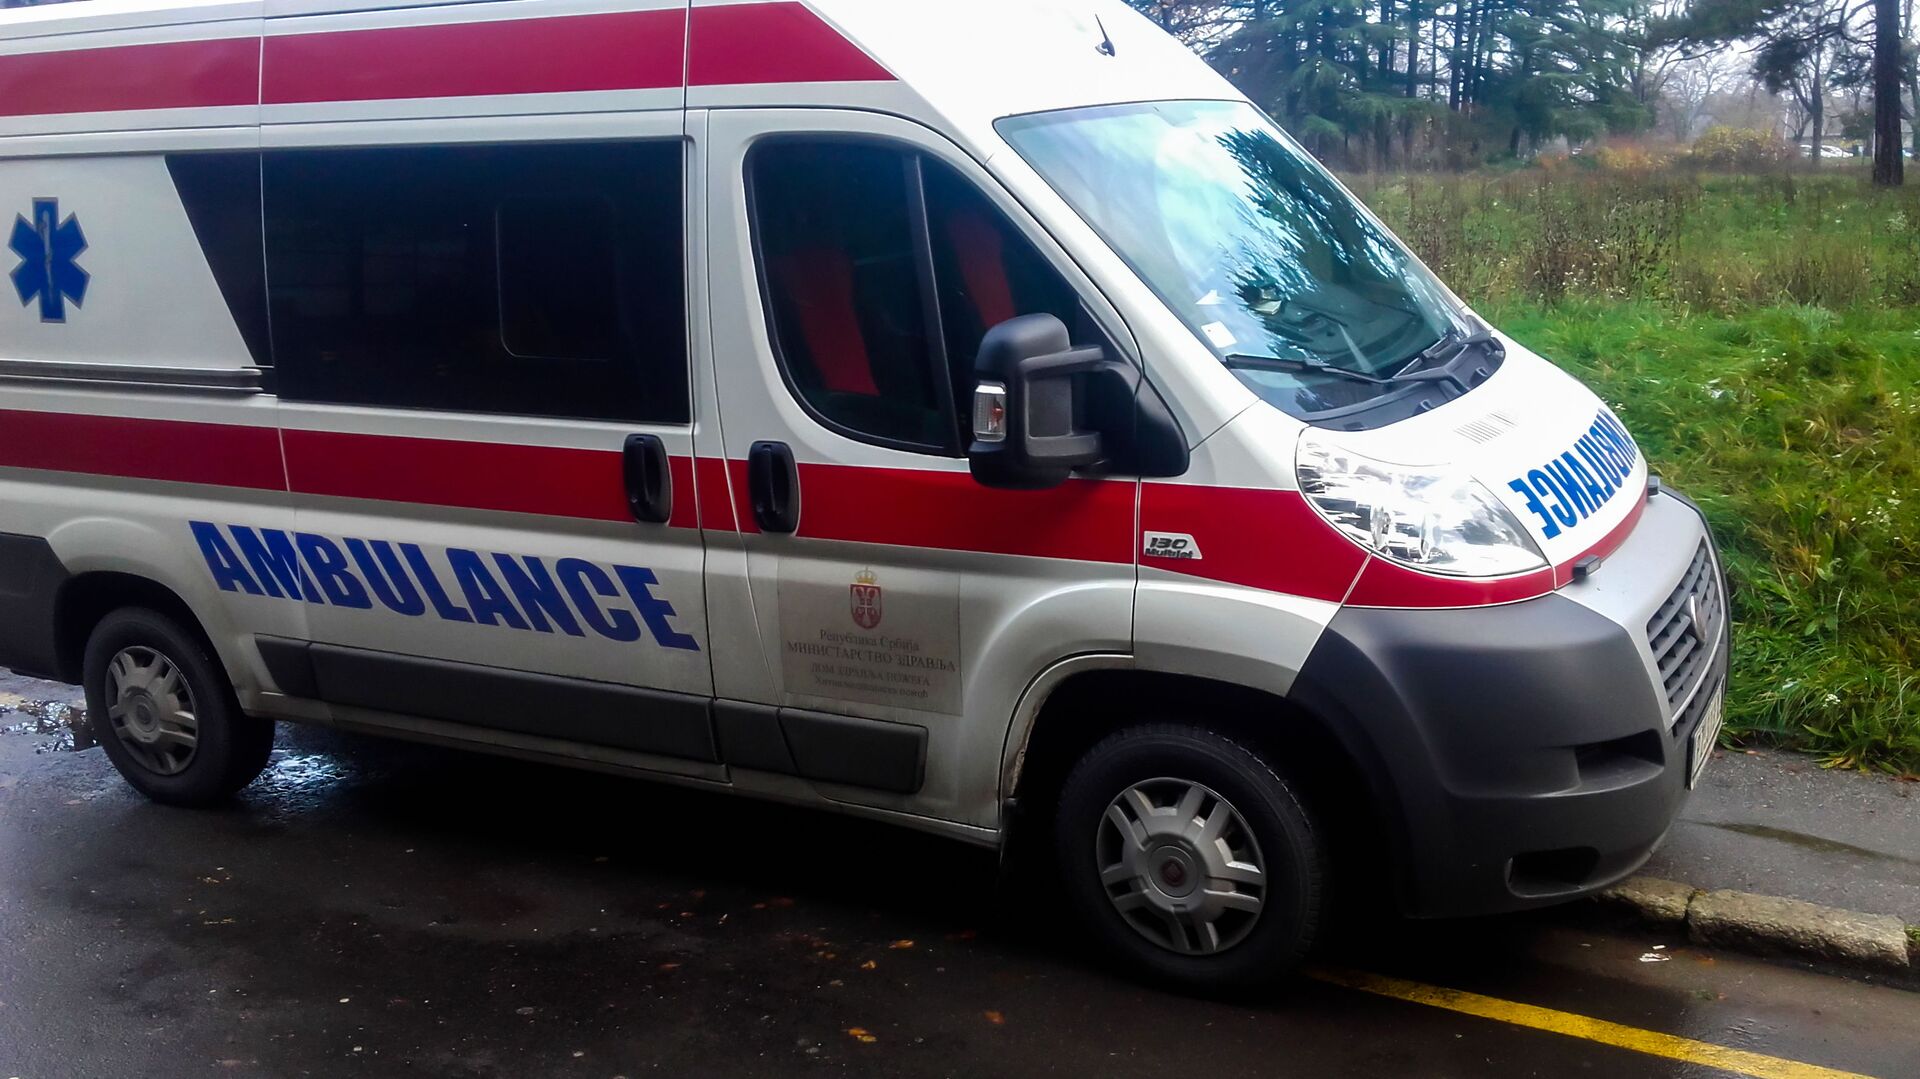 Co столкновение грузовика и автобус на дороге Панчевачко, четыре человека ранены